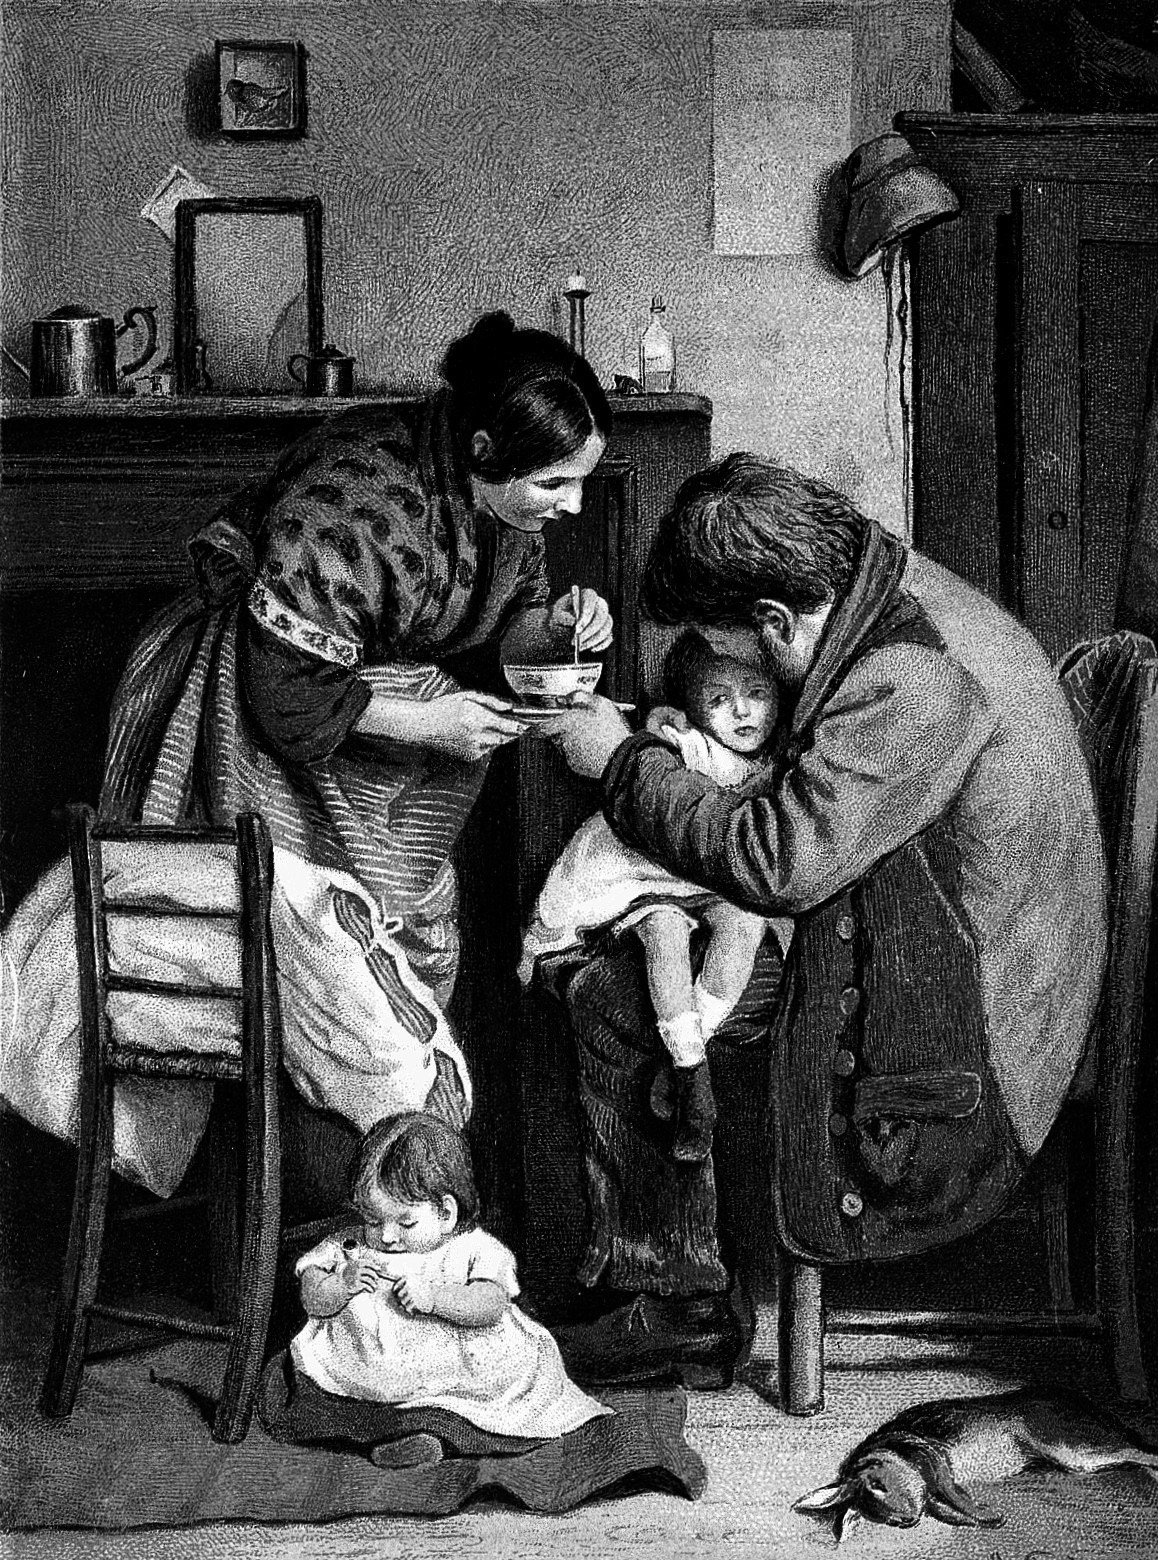 The Sick Child by Joseph Clark